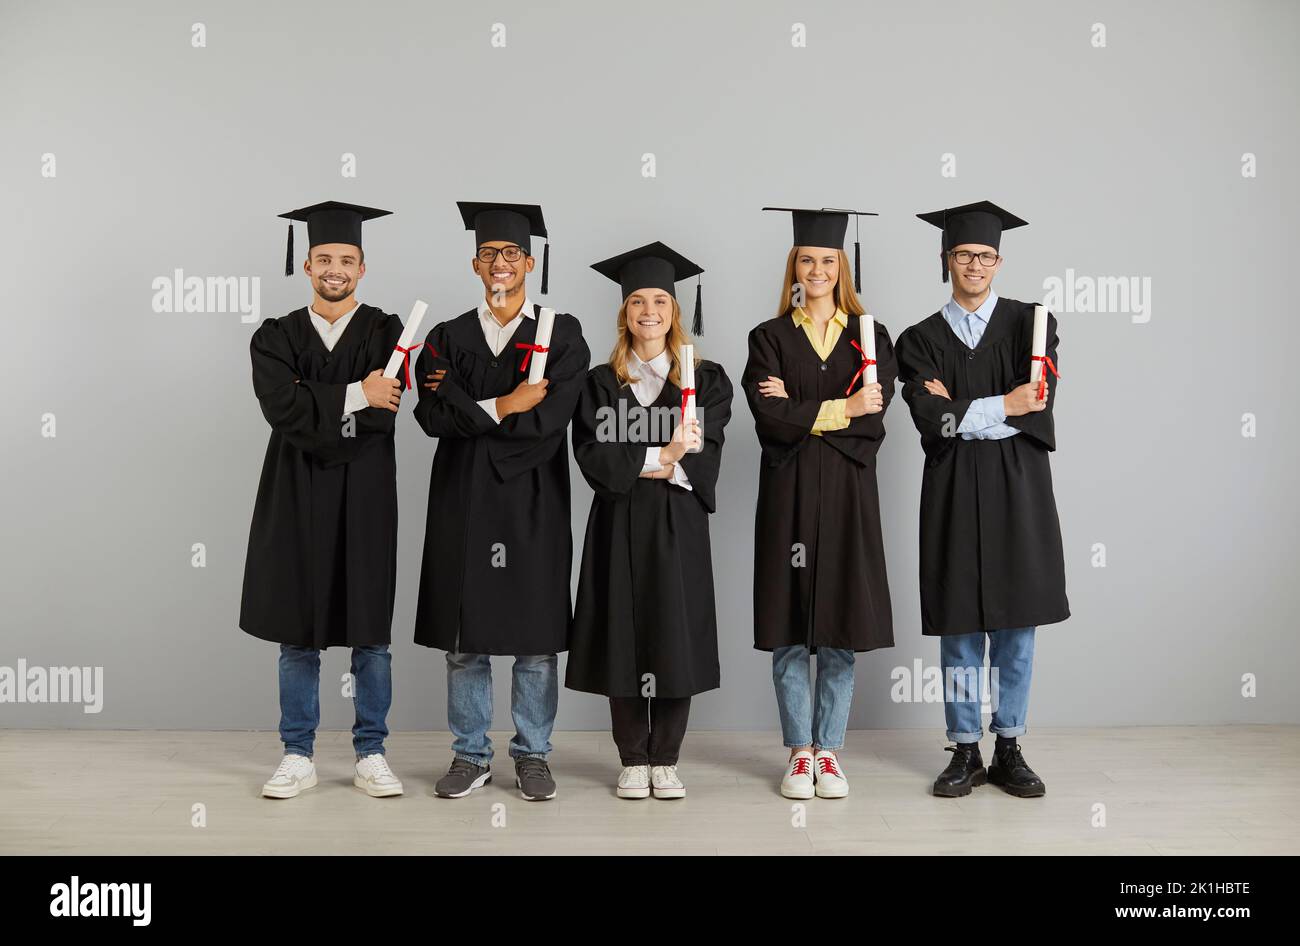 Portrait of diverse students graduates with diplomas Stock Photo